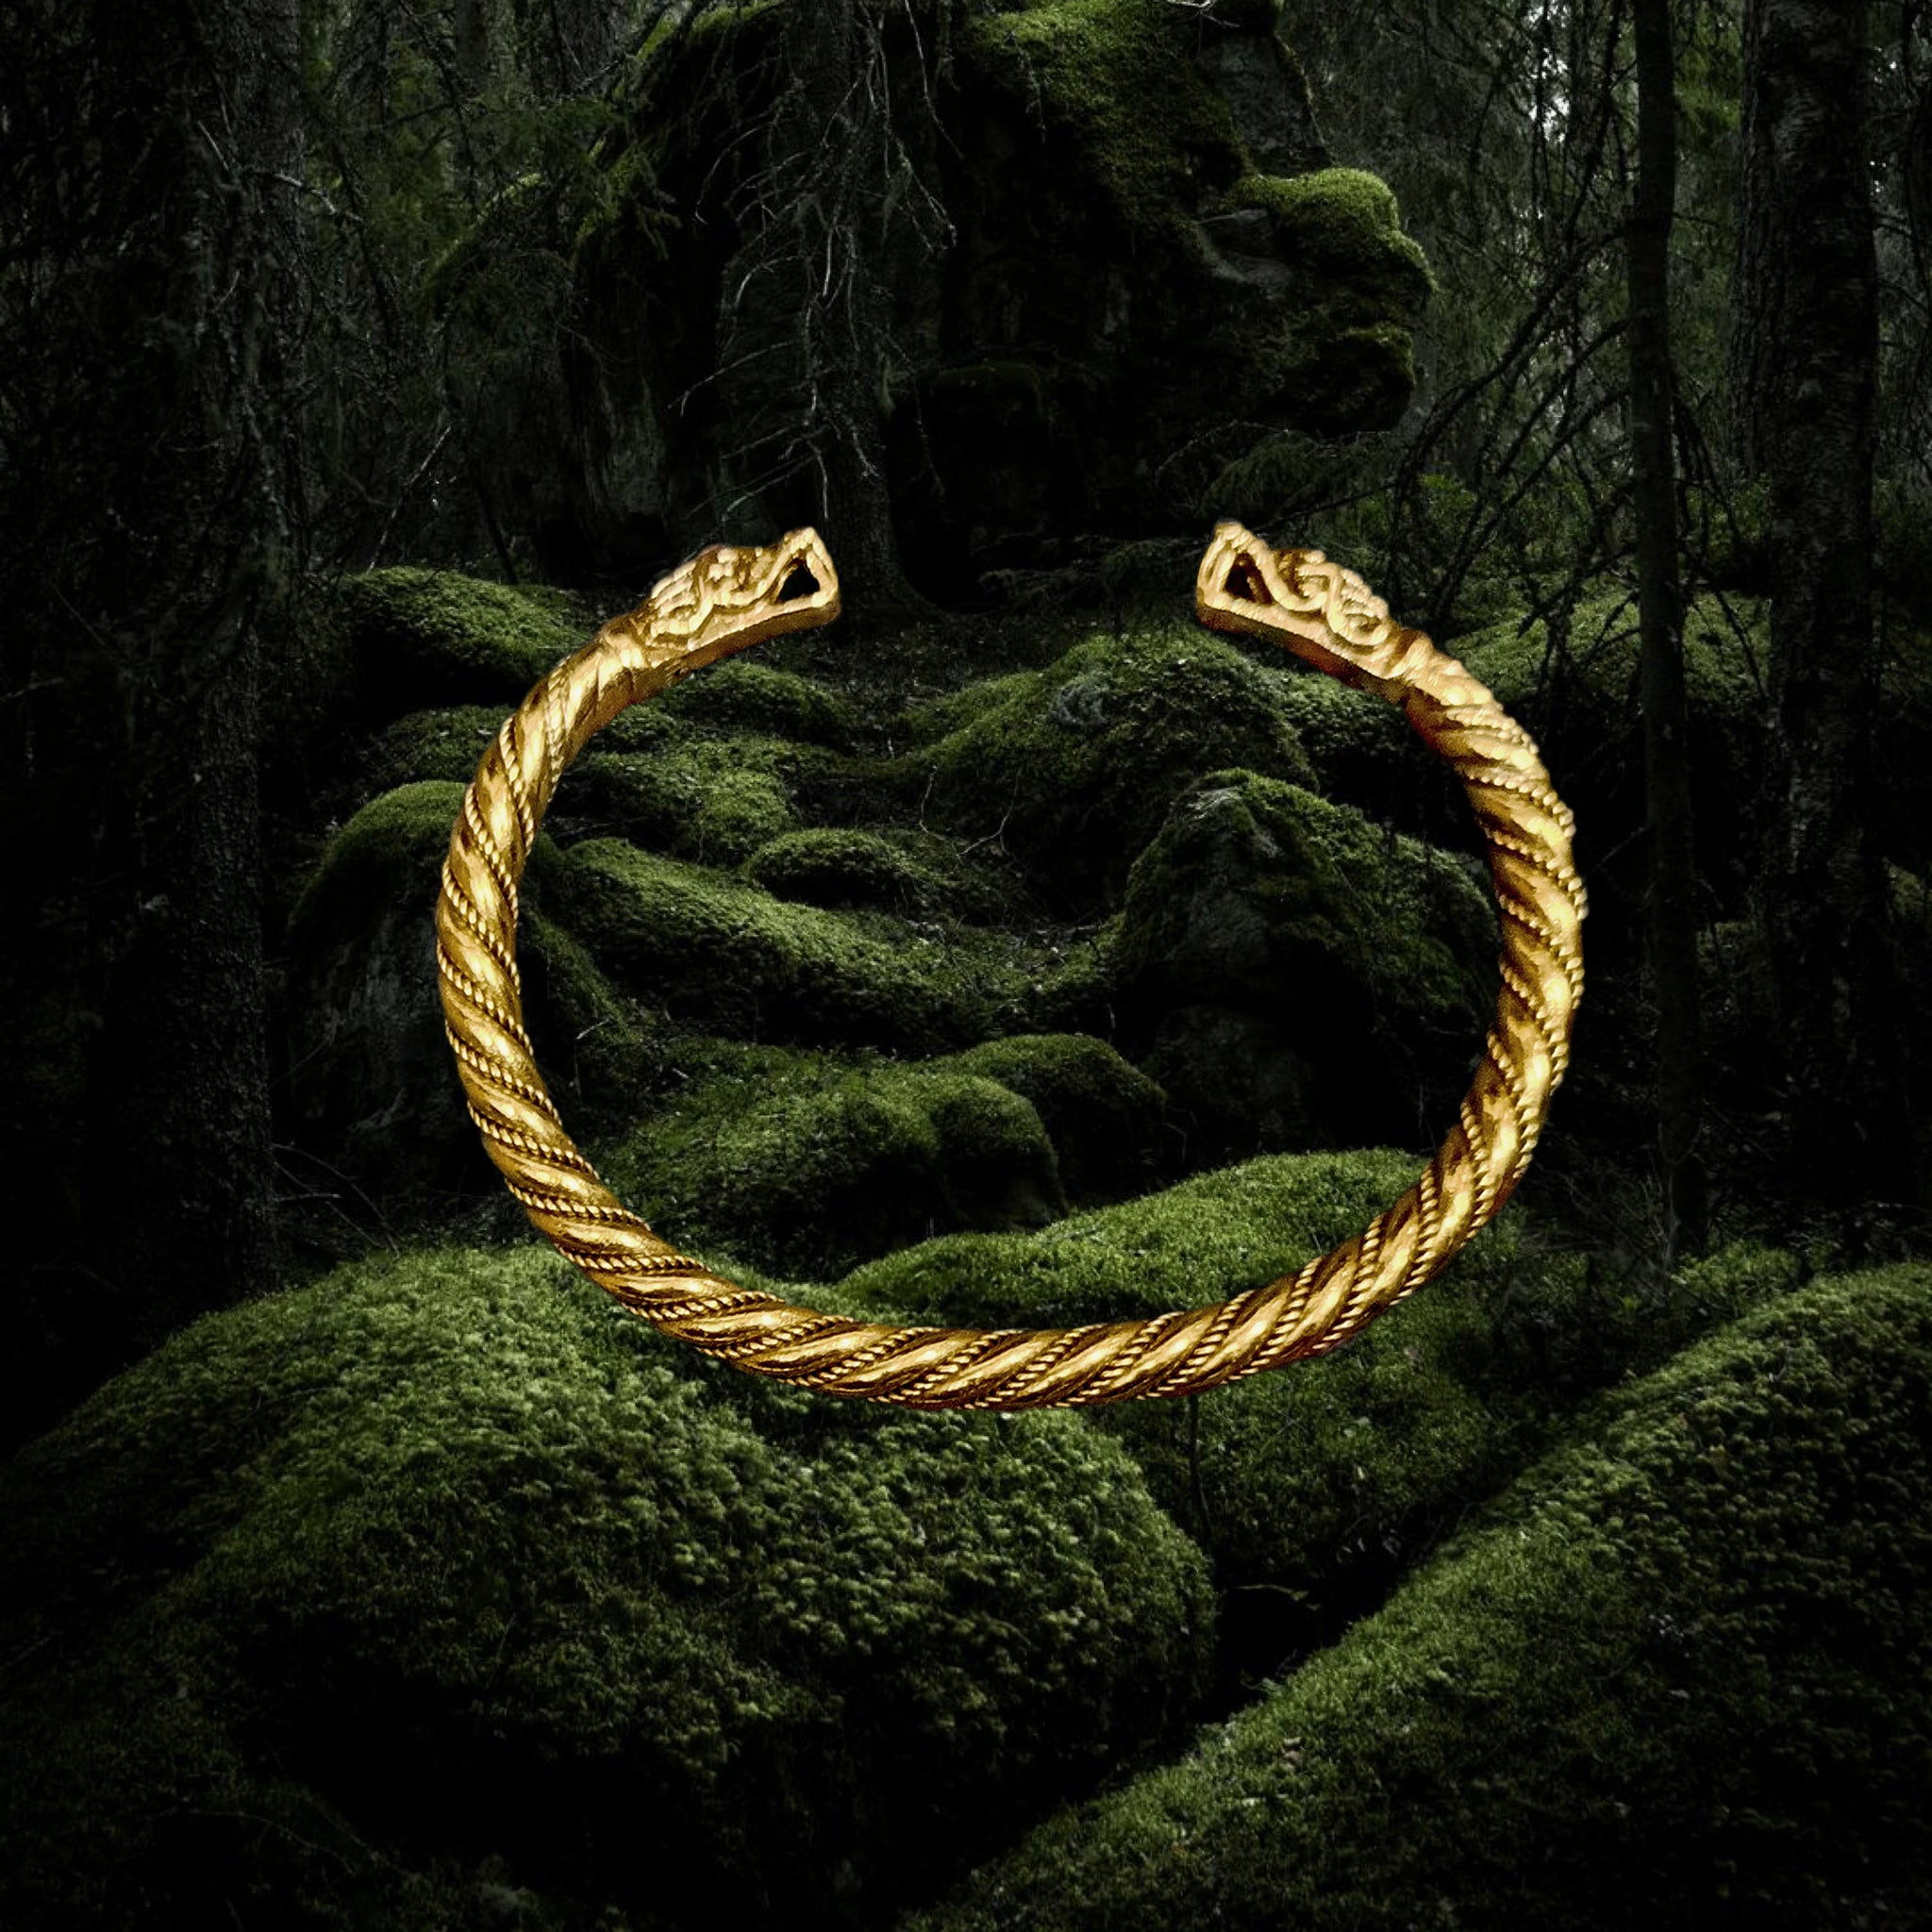 Handmade Twisted Bronze Bracelet With Gotlandic Dragon Heads - Small Size